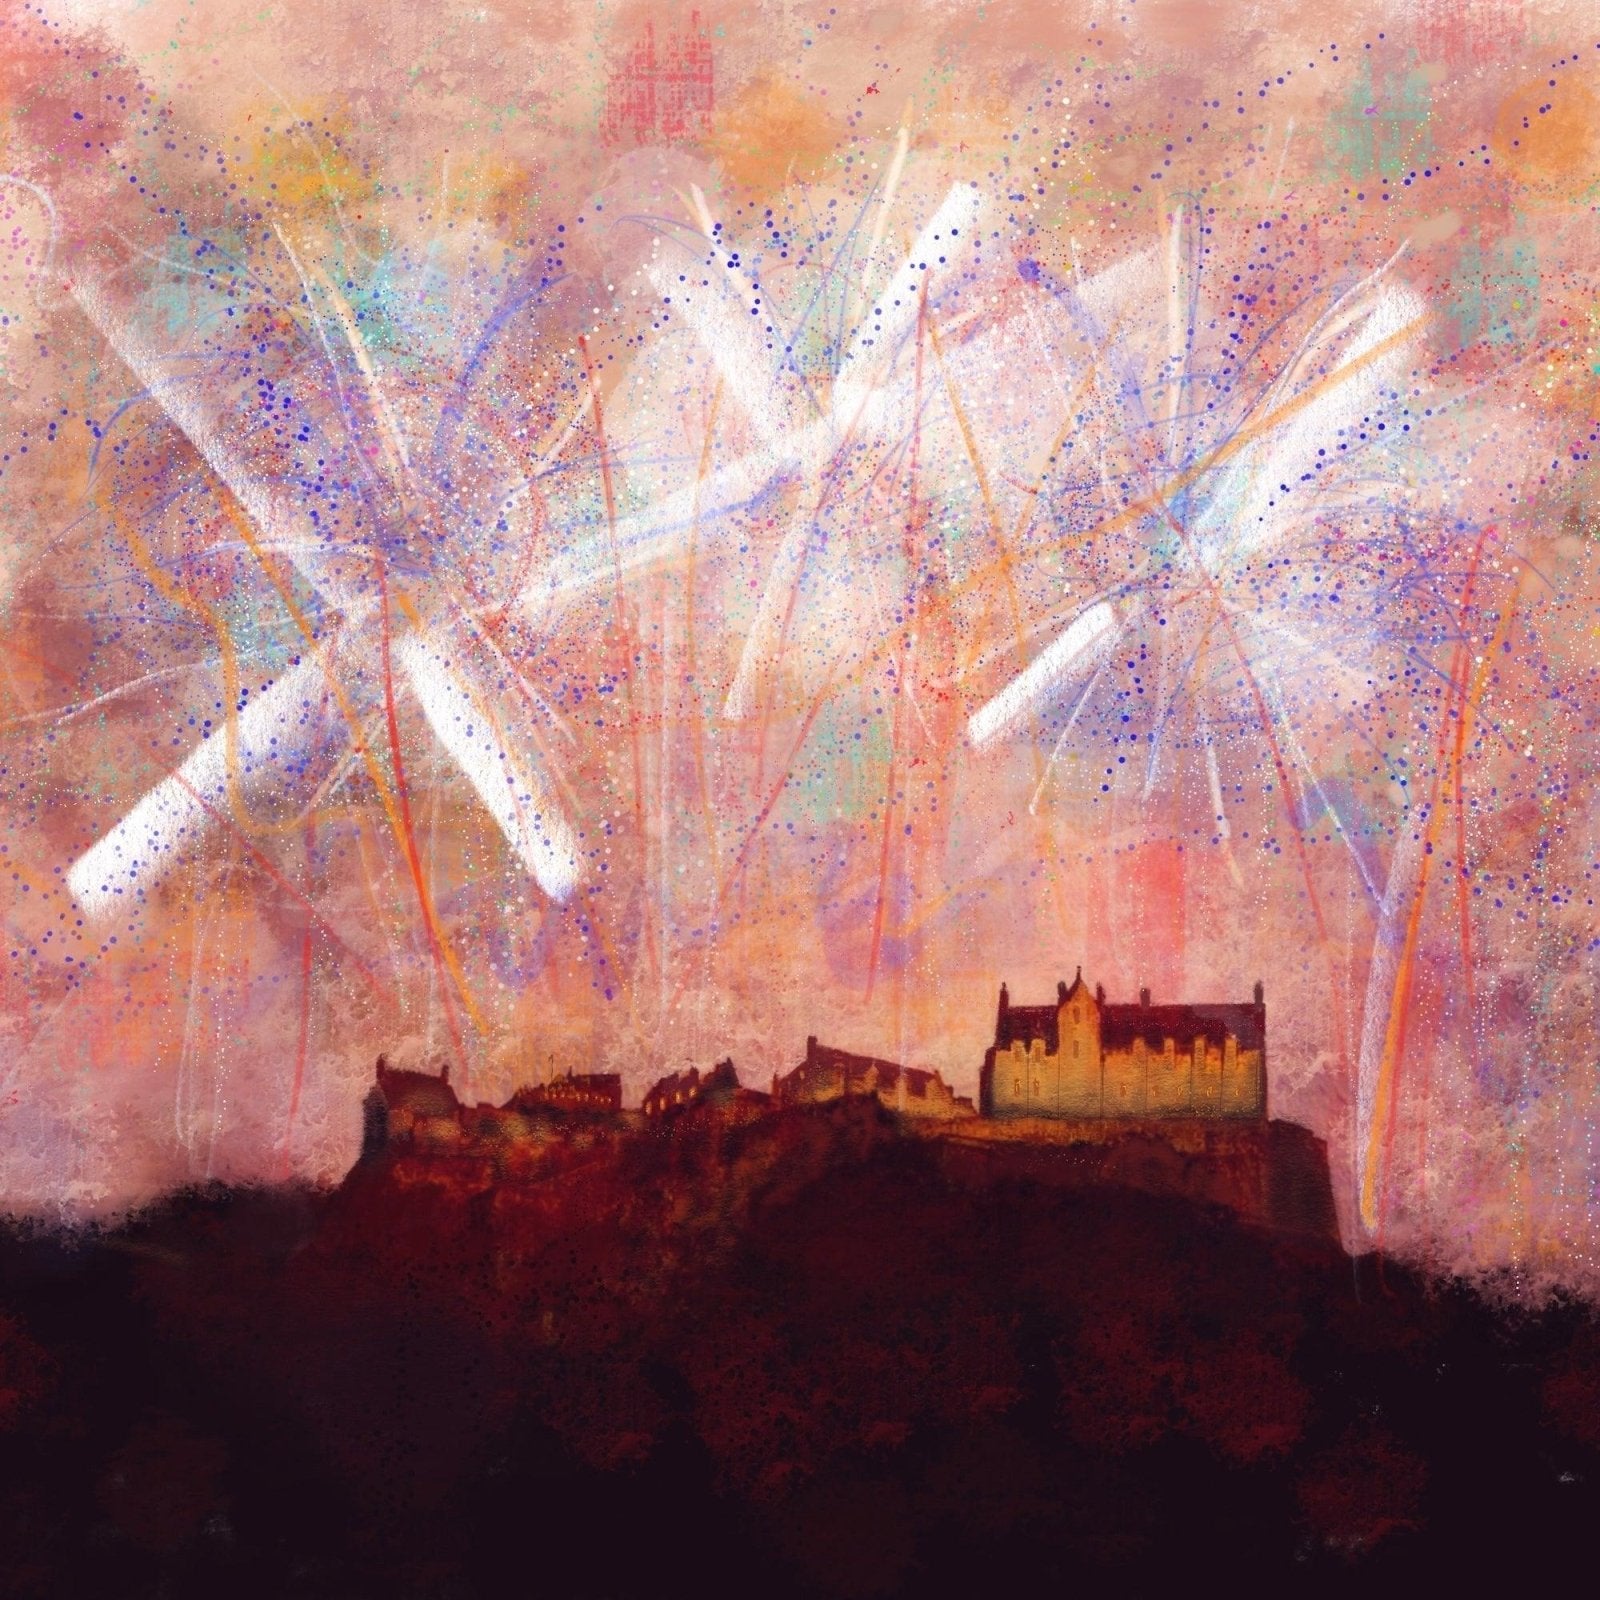 Edinburgh Castle Fireworks Wooden Art Block-Wooden Art Blocks-Edinburgh & Glasgow Art Gallery-Paintings, Prints, Homeware, Art Gifts From Scotland By Scottish Artist Kevin Hunter